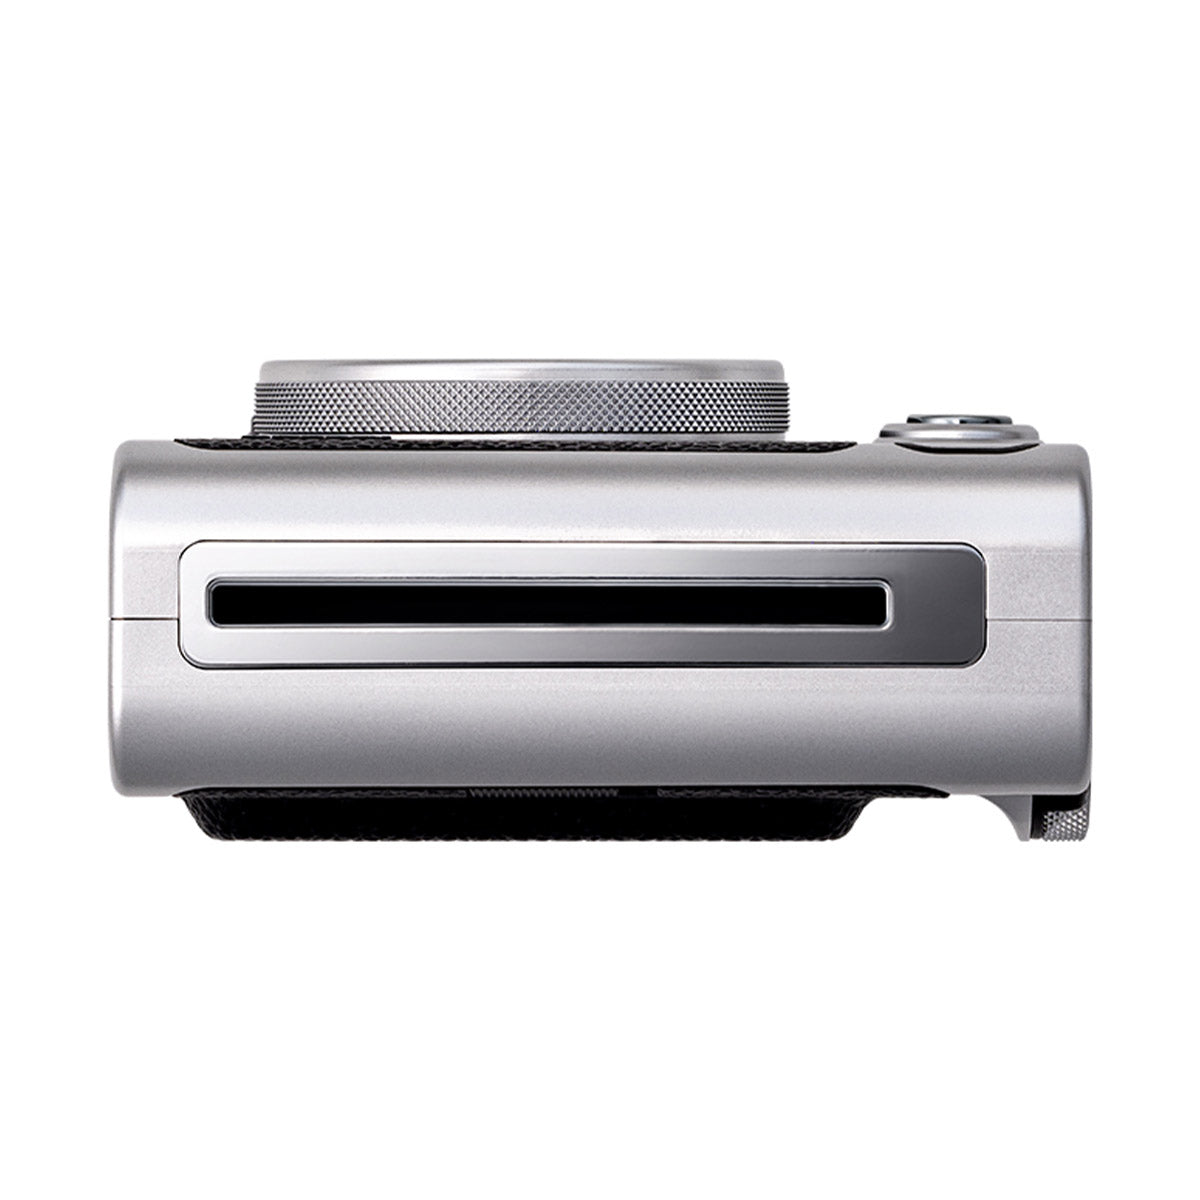 Fujifilm INSTAX Mini Evo Hybrid Instant Camera